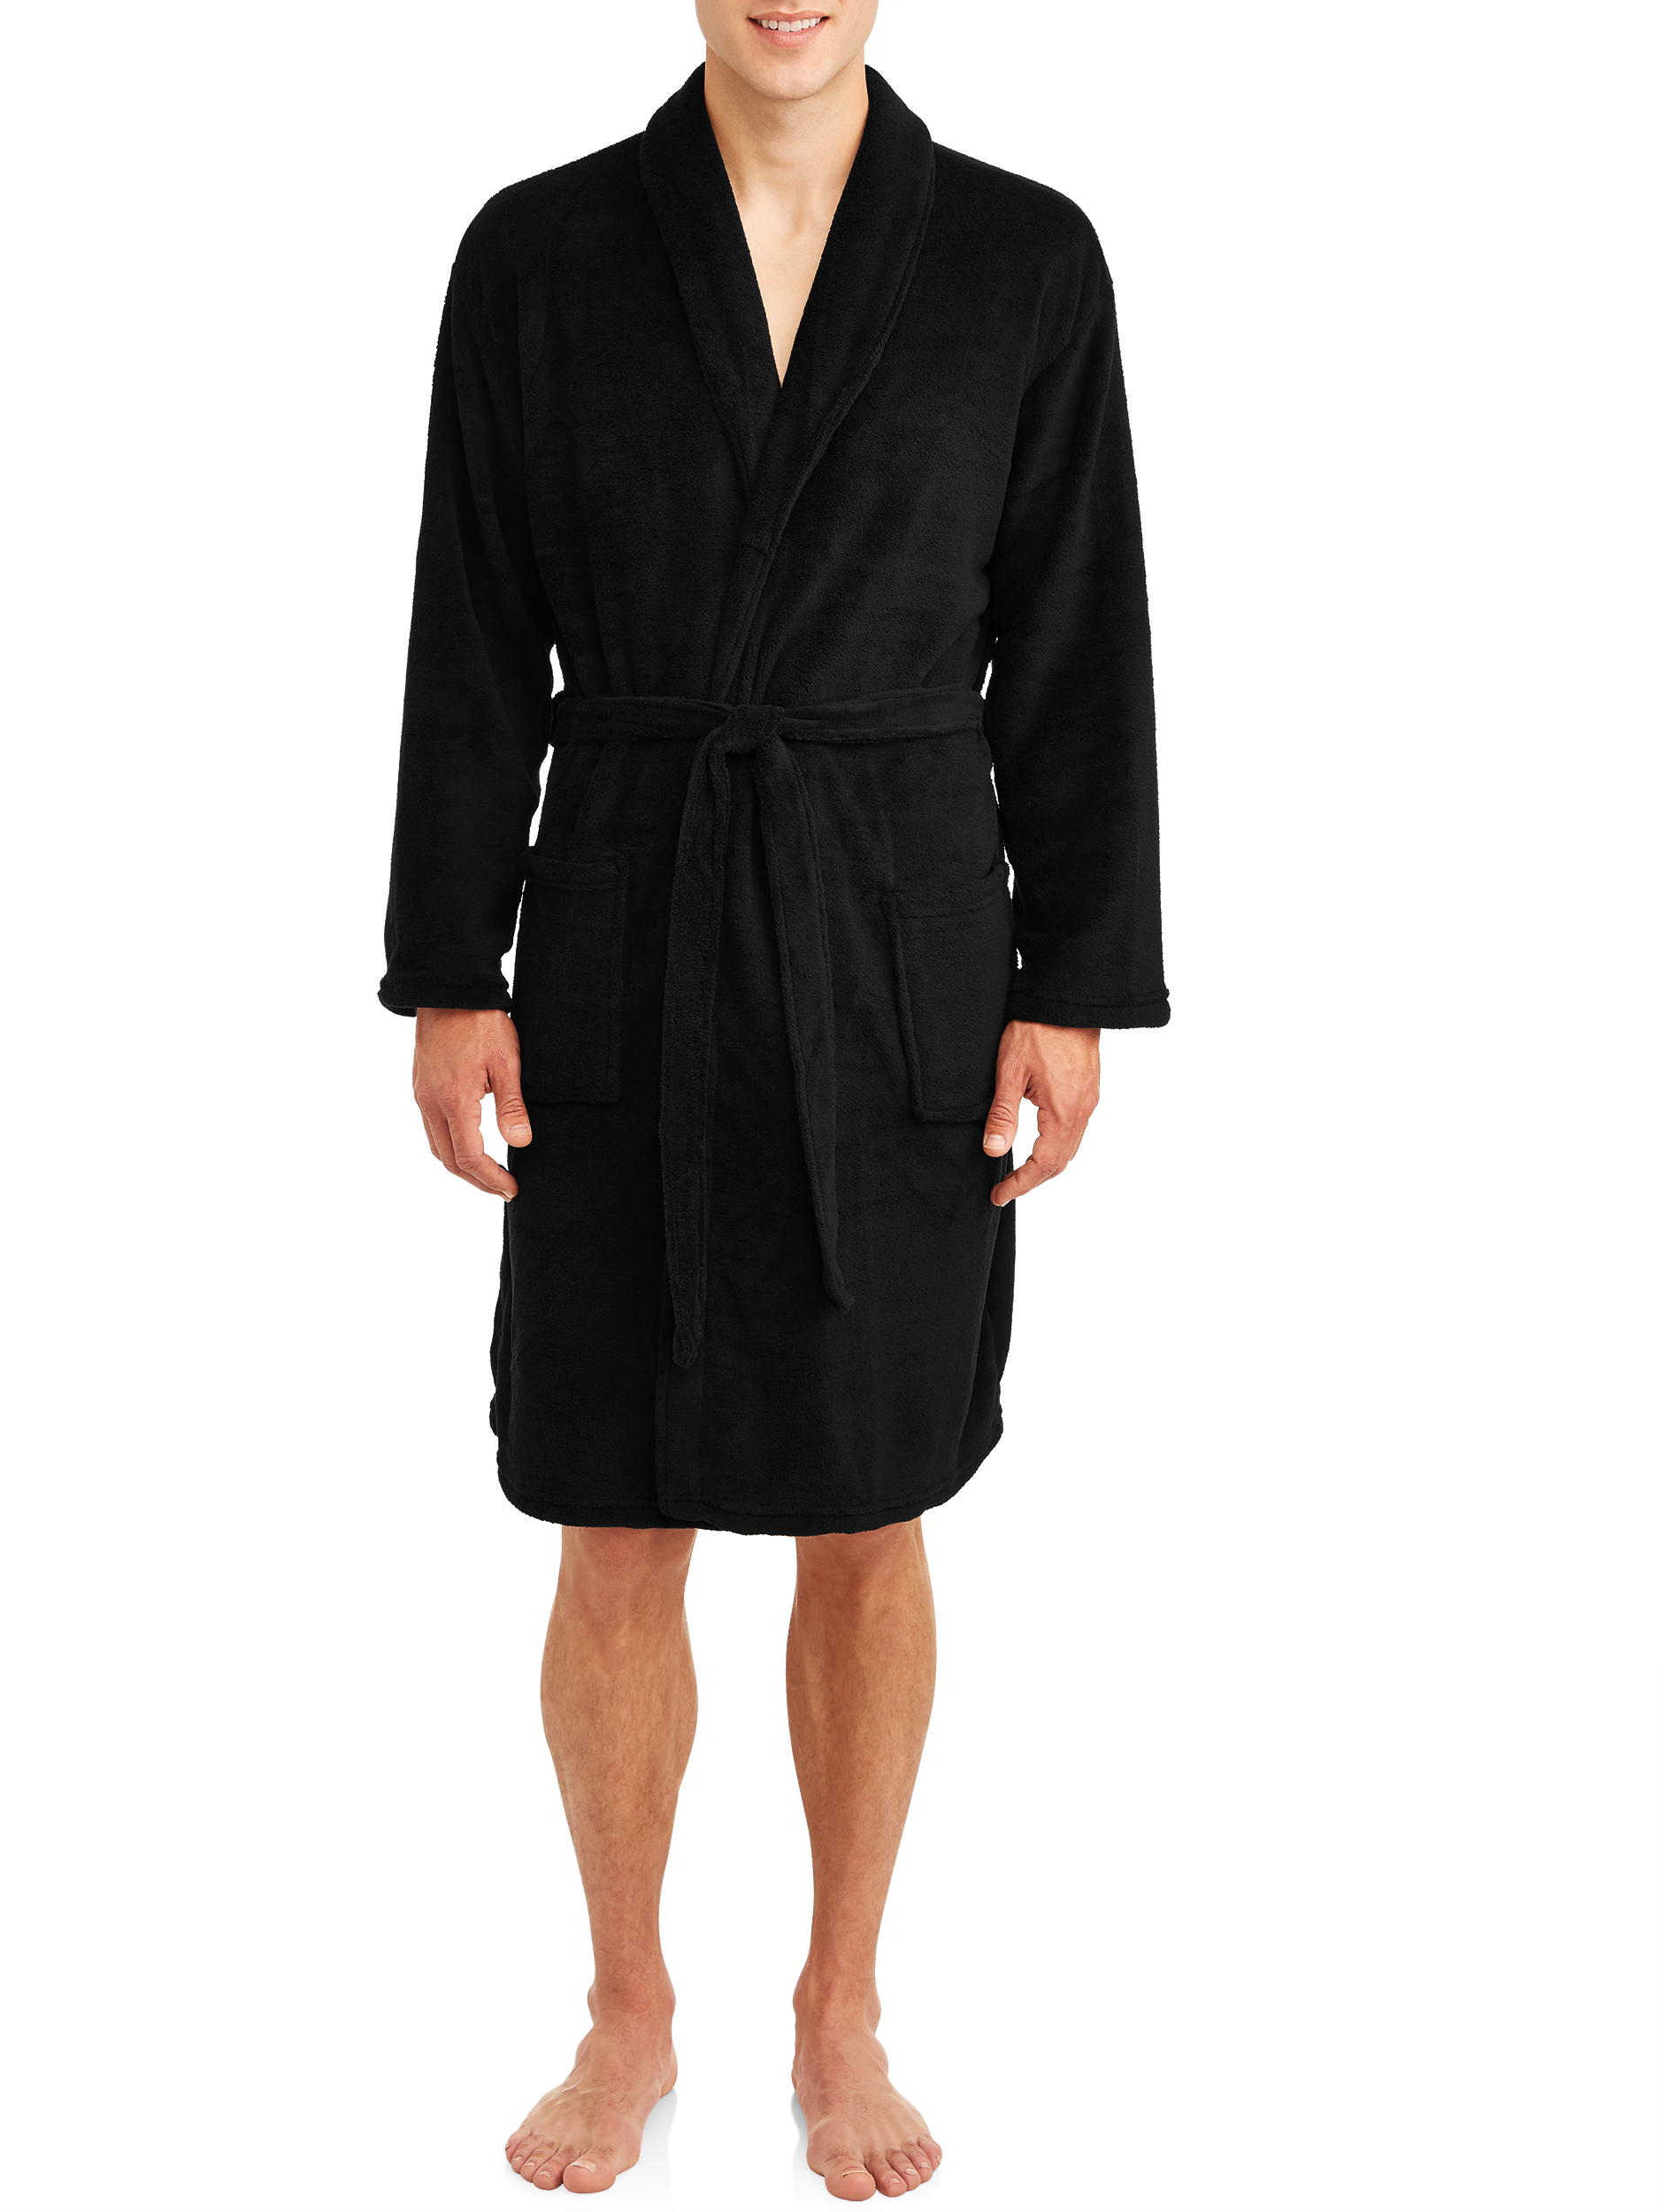 Blue Star Clothing Company Men's Knee-Length Soft Plush Body Bath Robe - image 1 of 4